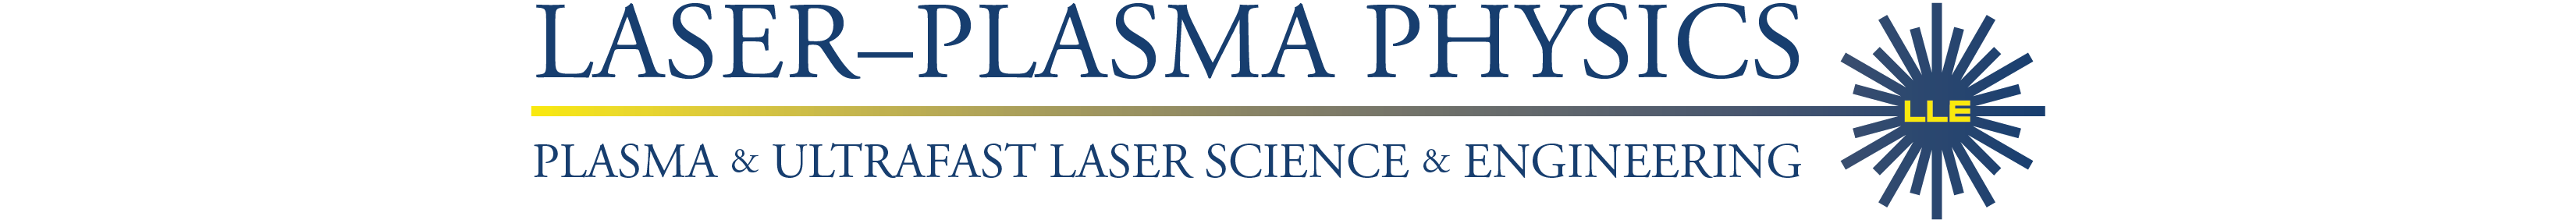 Laser–Plasma Physics logo